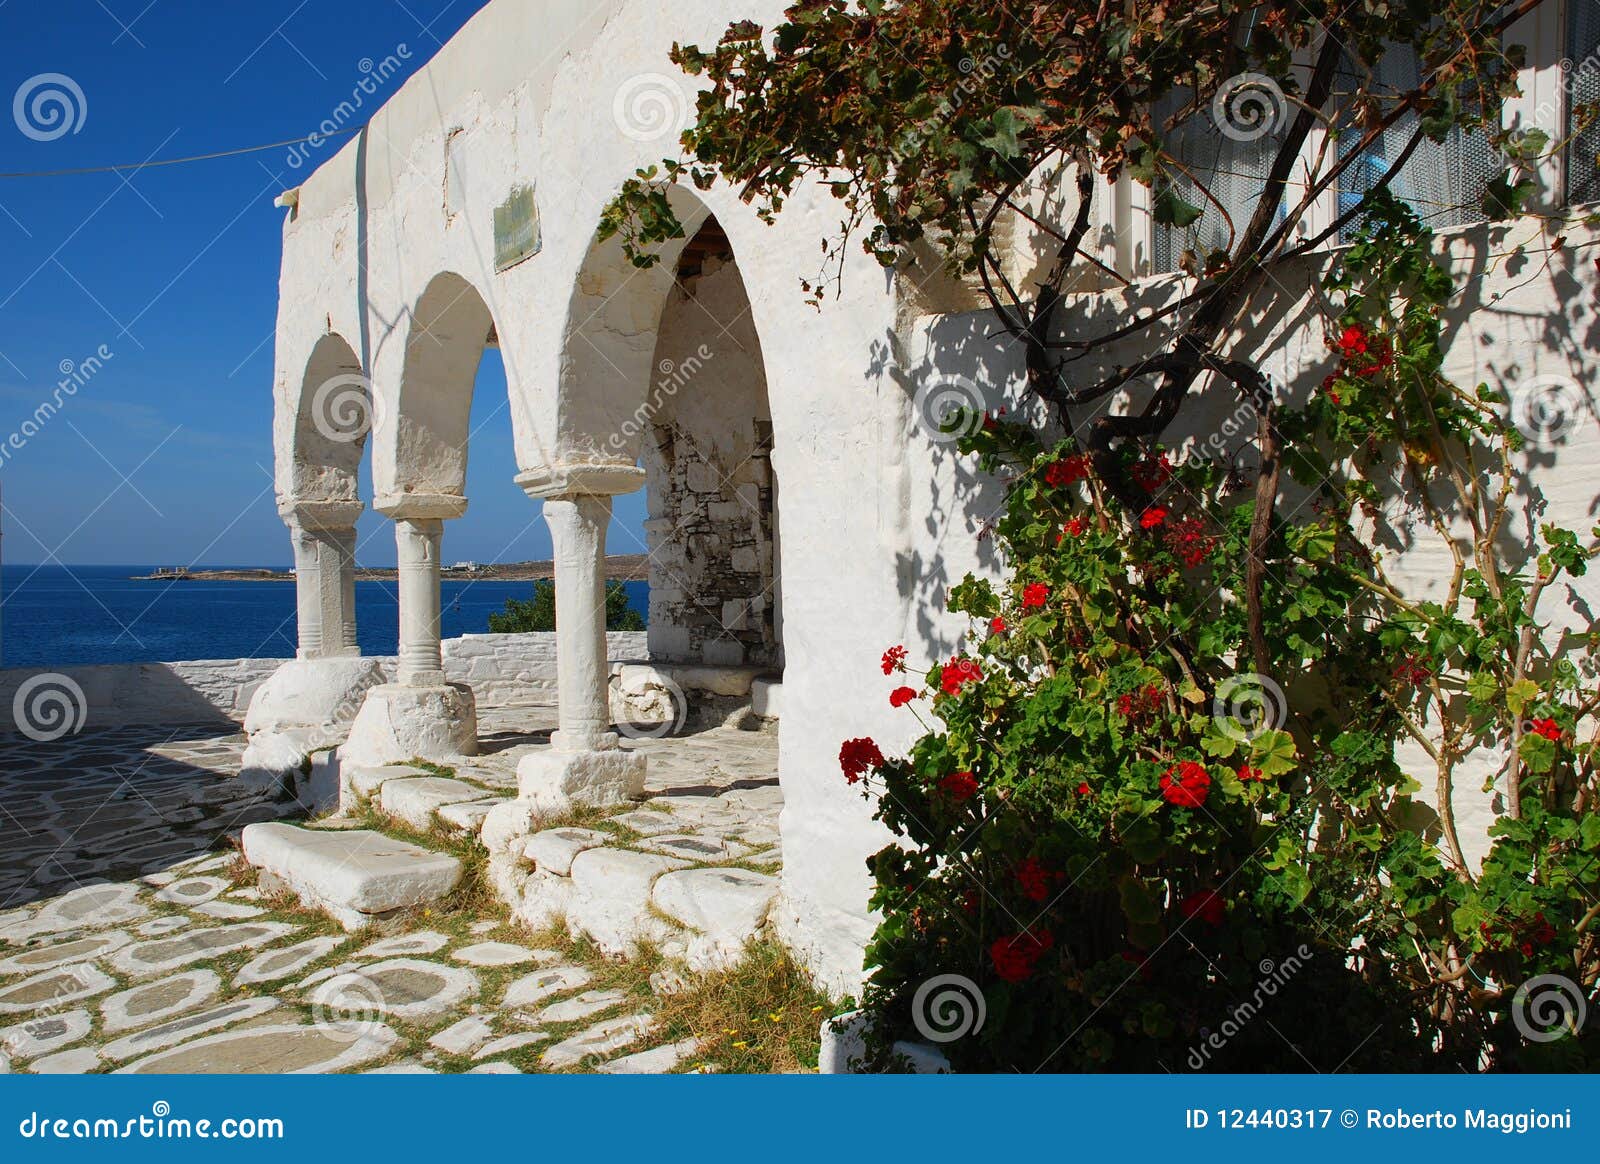 island of paros, arched passageway, greece.